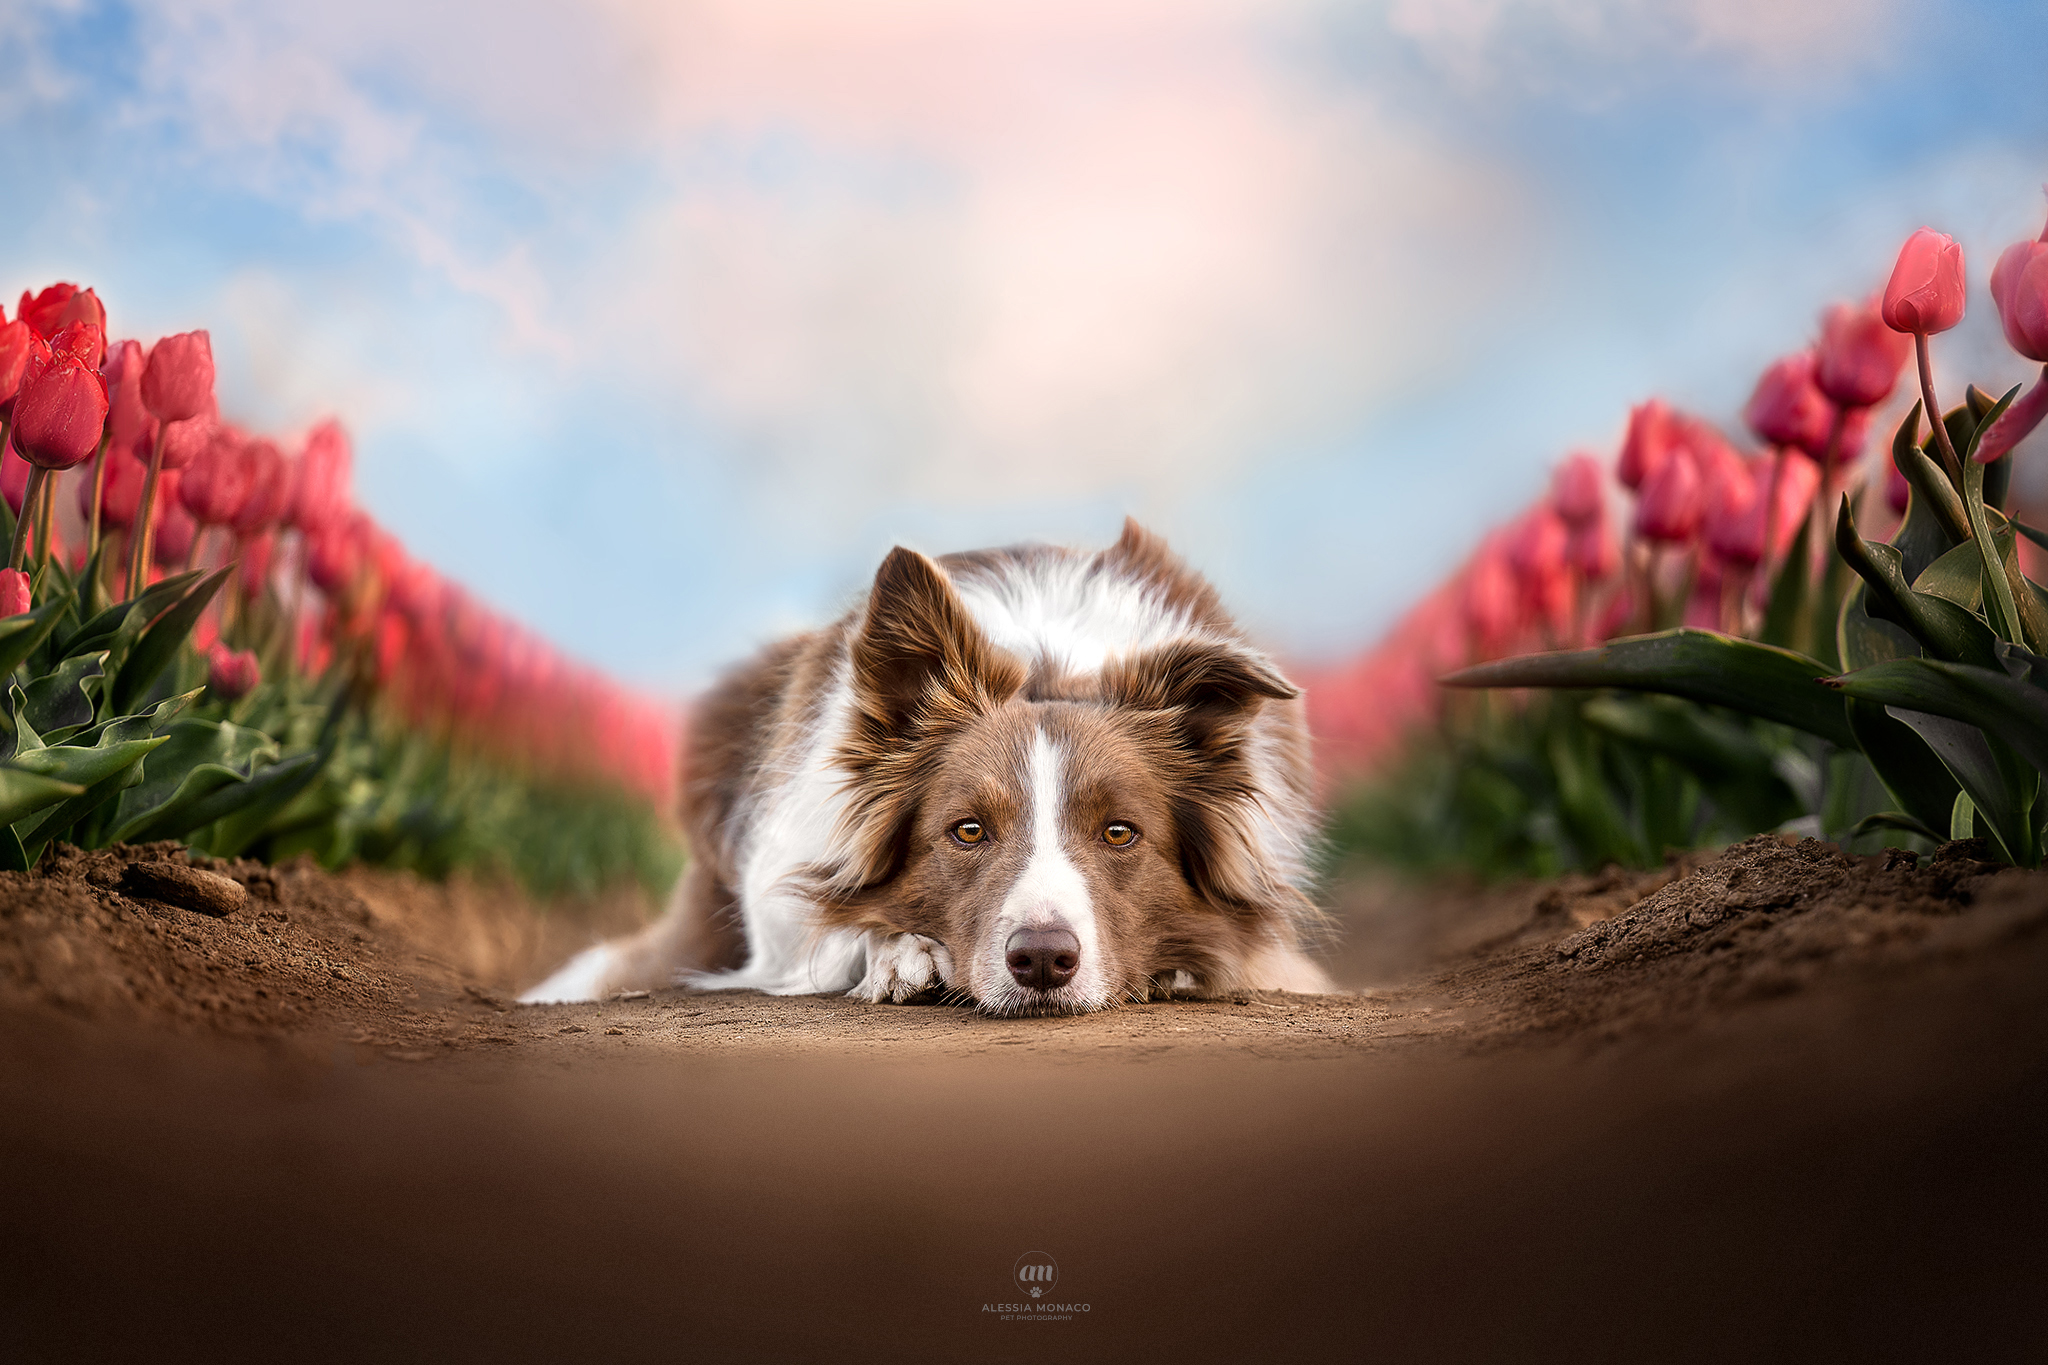 Dog and tulips...